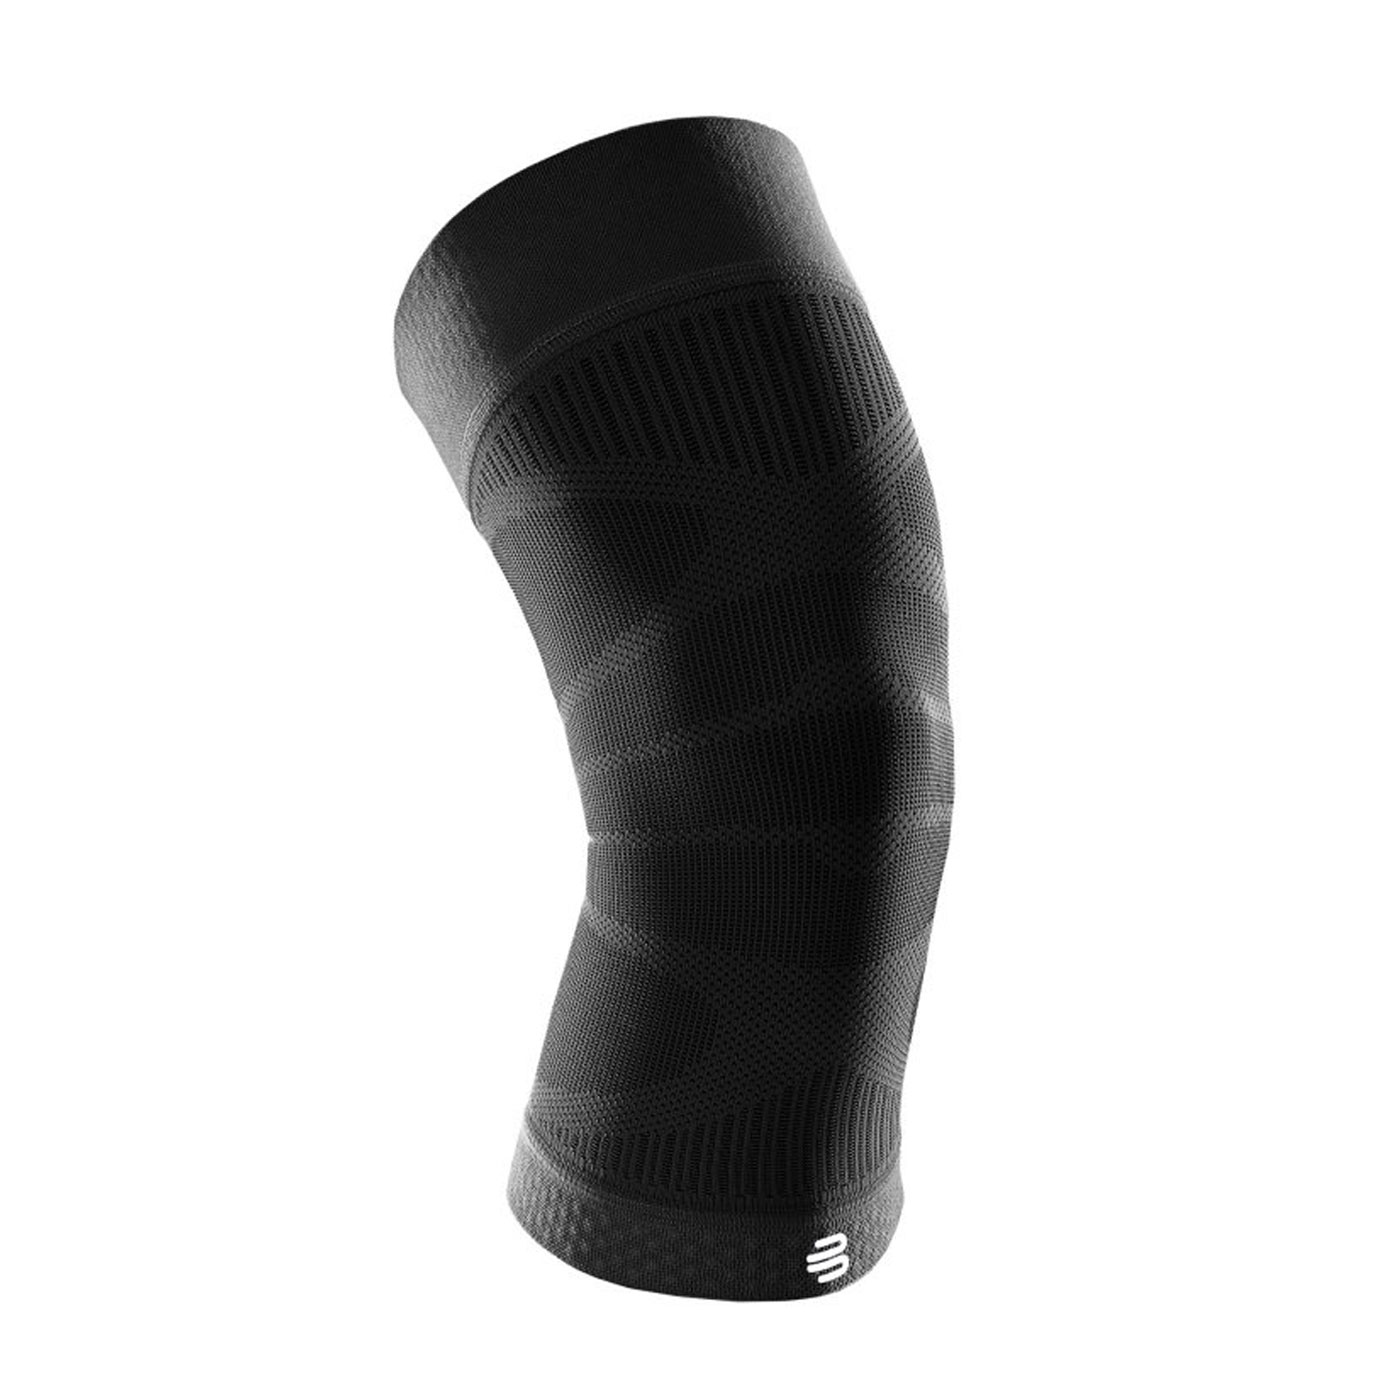 BAUERFEIND保爾範 專業運動壓縮護膝束套 70000356 - 黑白